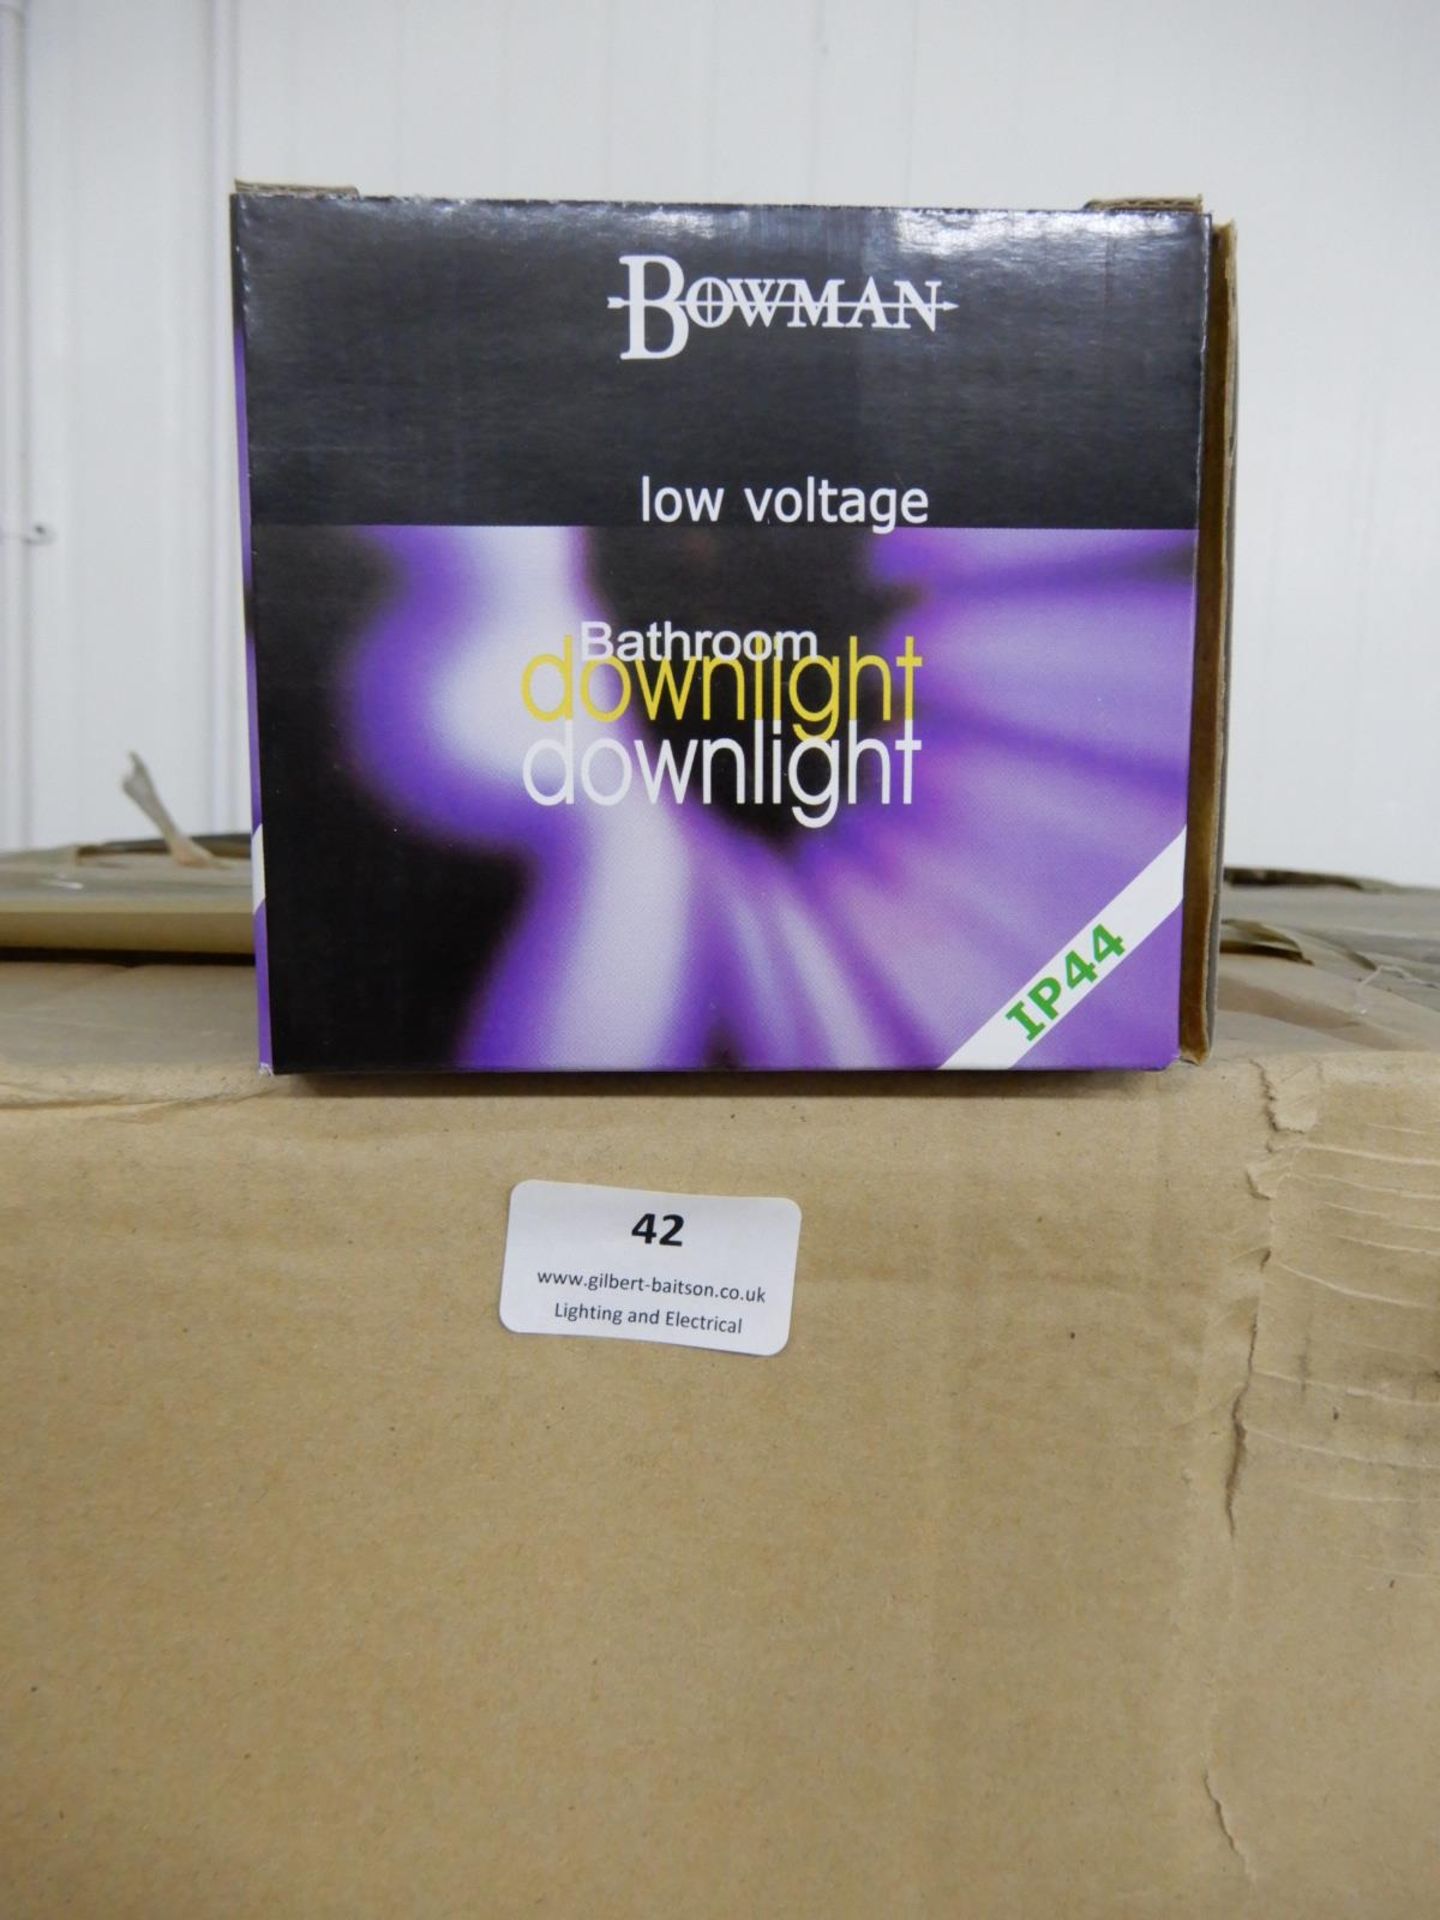 *Pallet of ~1196 Bowman BOW-LVBLW Low Voltage Bathroom Downlights